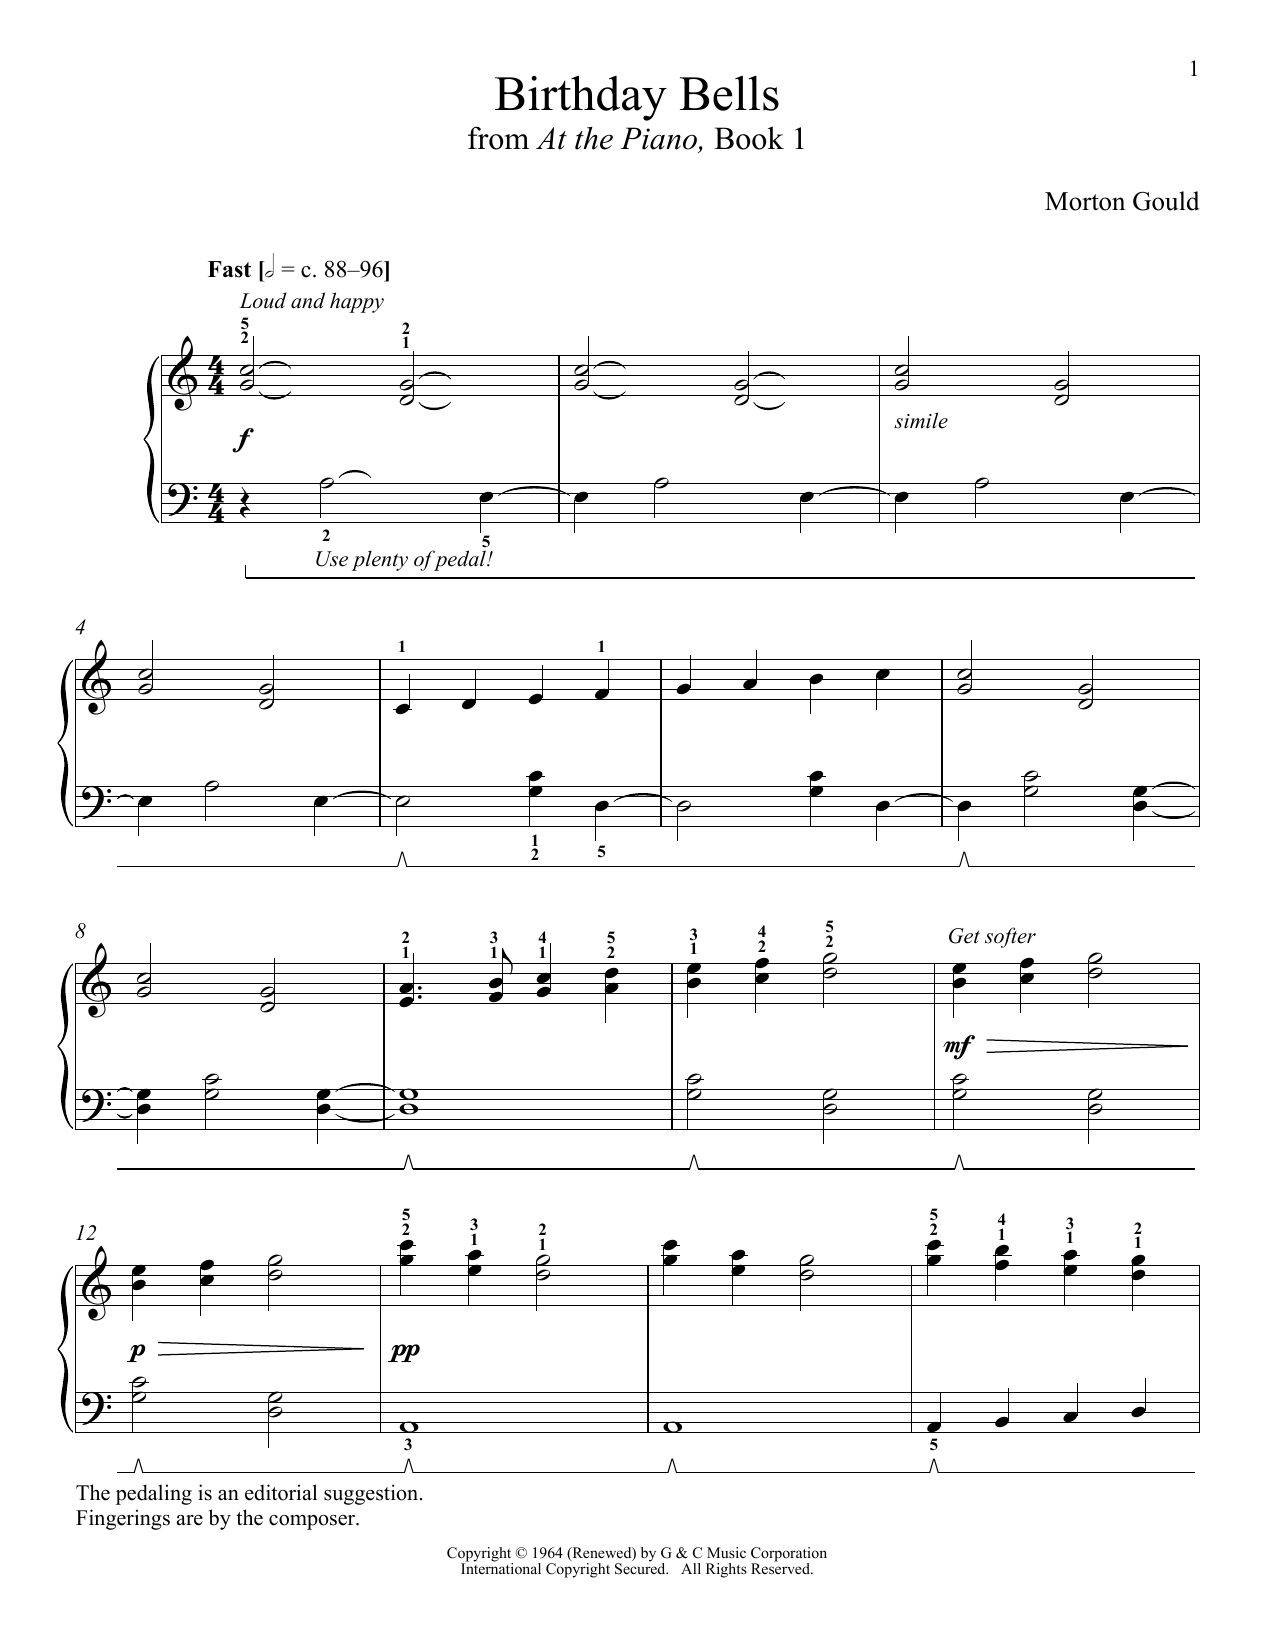 Download Morton Gould Birthday Bells Sheet Music